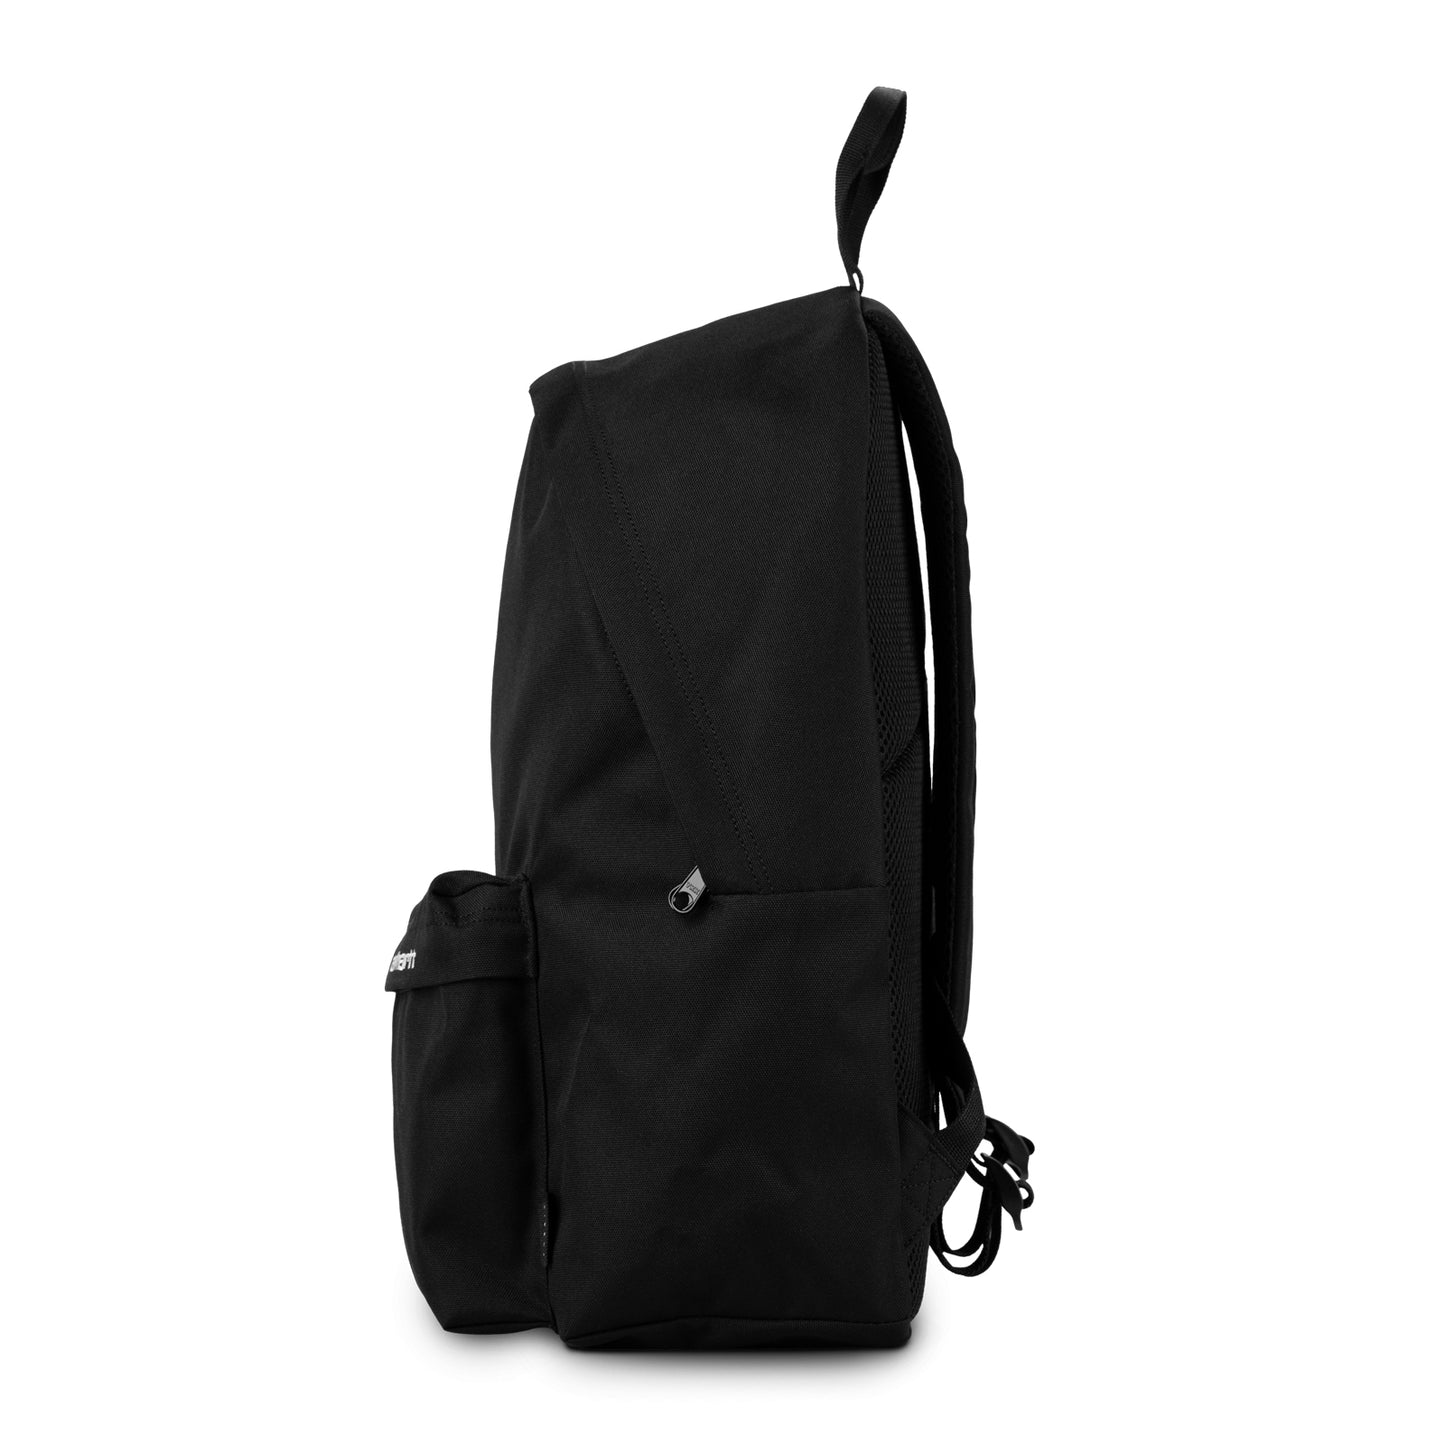 Carhartt WIP Payton Backpack Black/White. Foto do lado esquerdo.